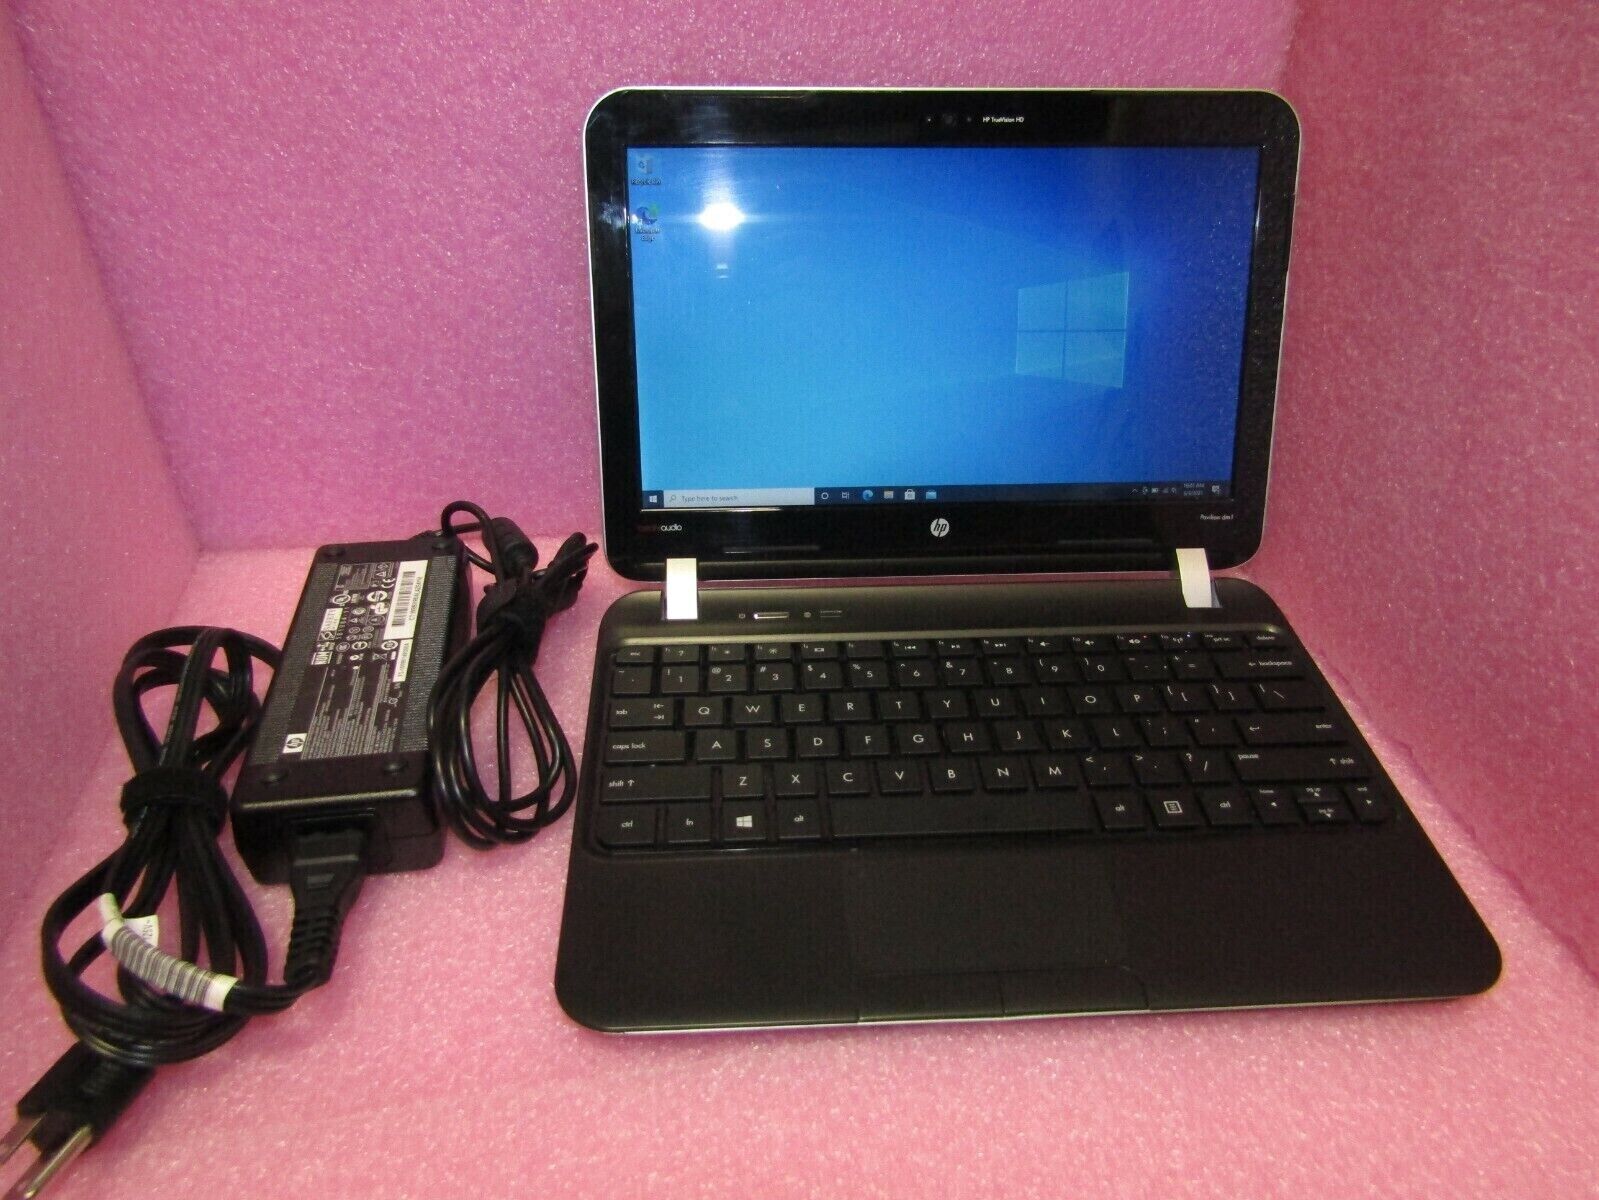 HP Pavilion dm1-4310nr Notebook PC 500 GB HDD 4 GB RAM BEATS Audio